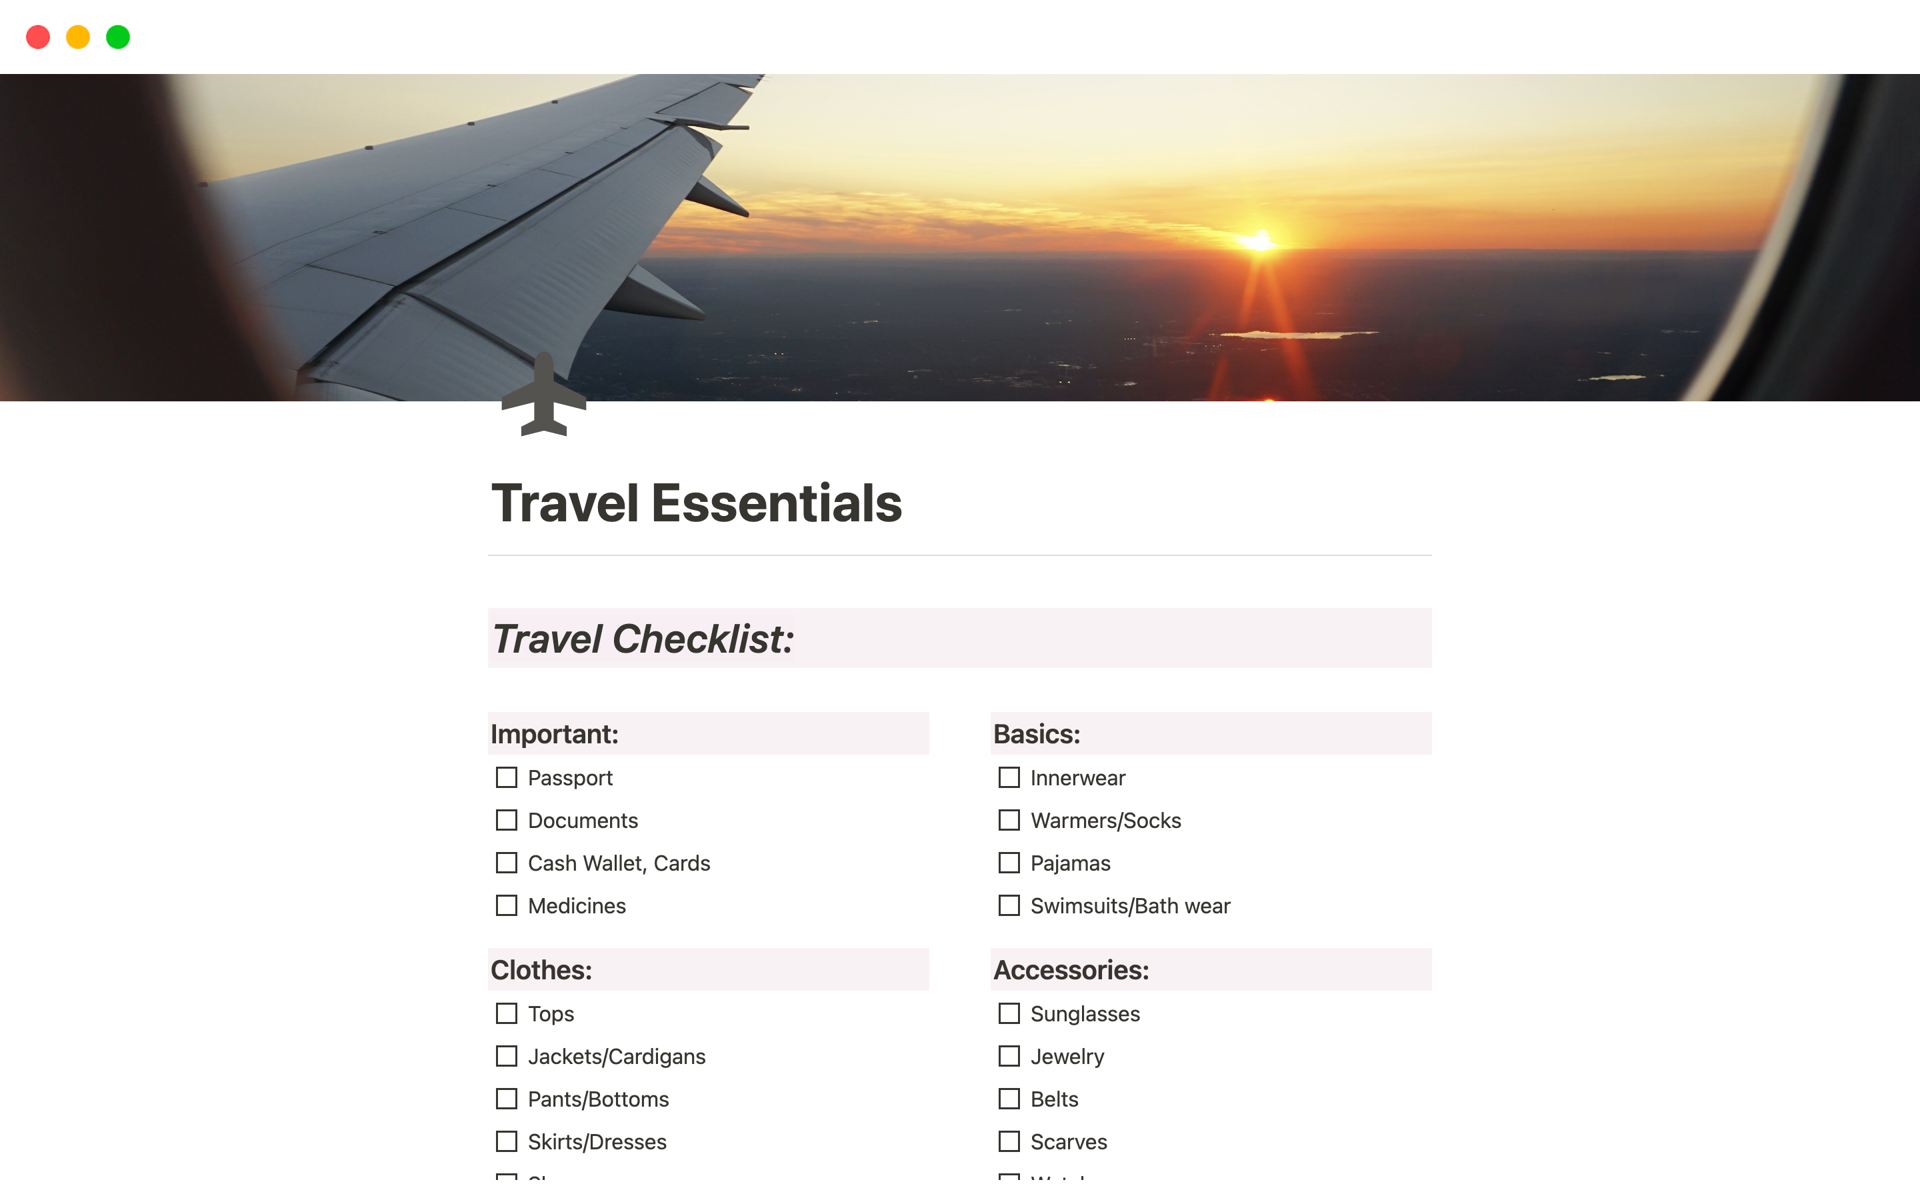 Aperçu du modèle de Travel Essentials